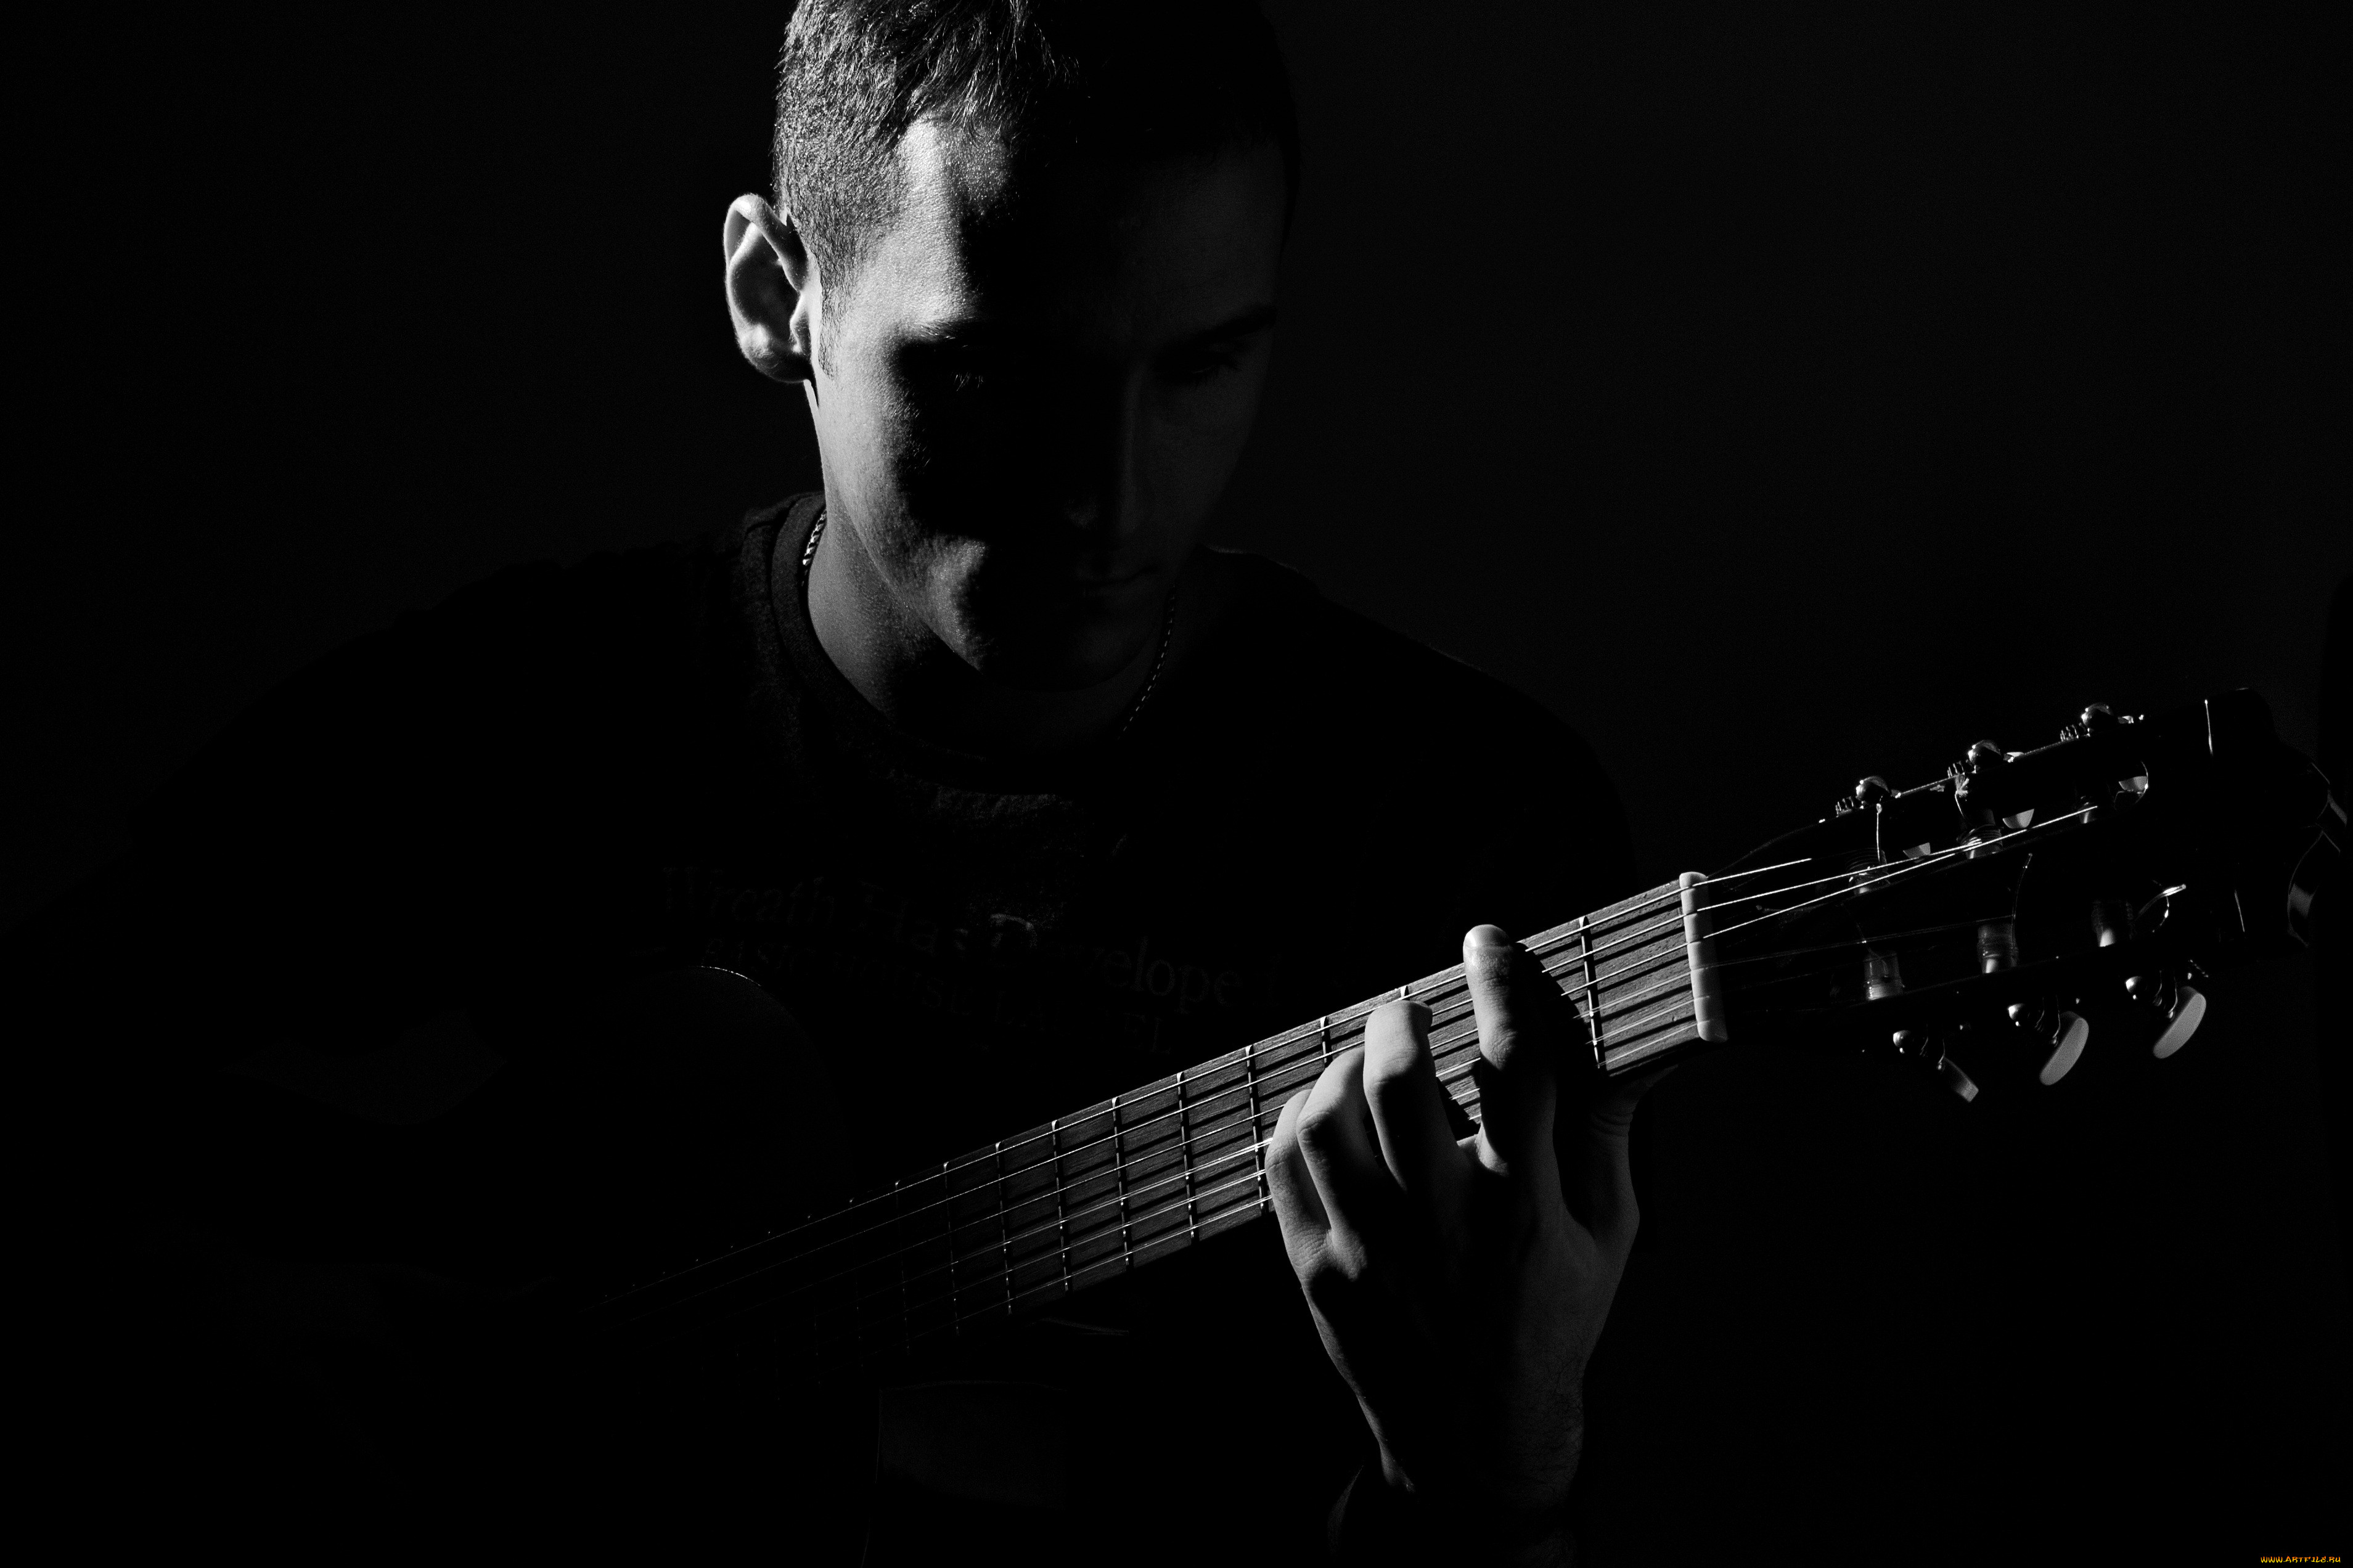 Musica stasera. Мужчина с гитарой. С гитарой в темноте. Гитарист на черном фоне. Гитара на черном фоне.